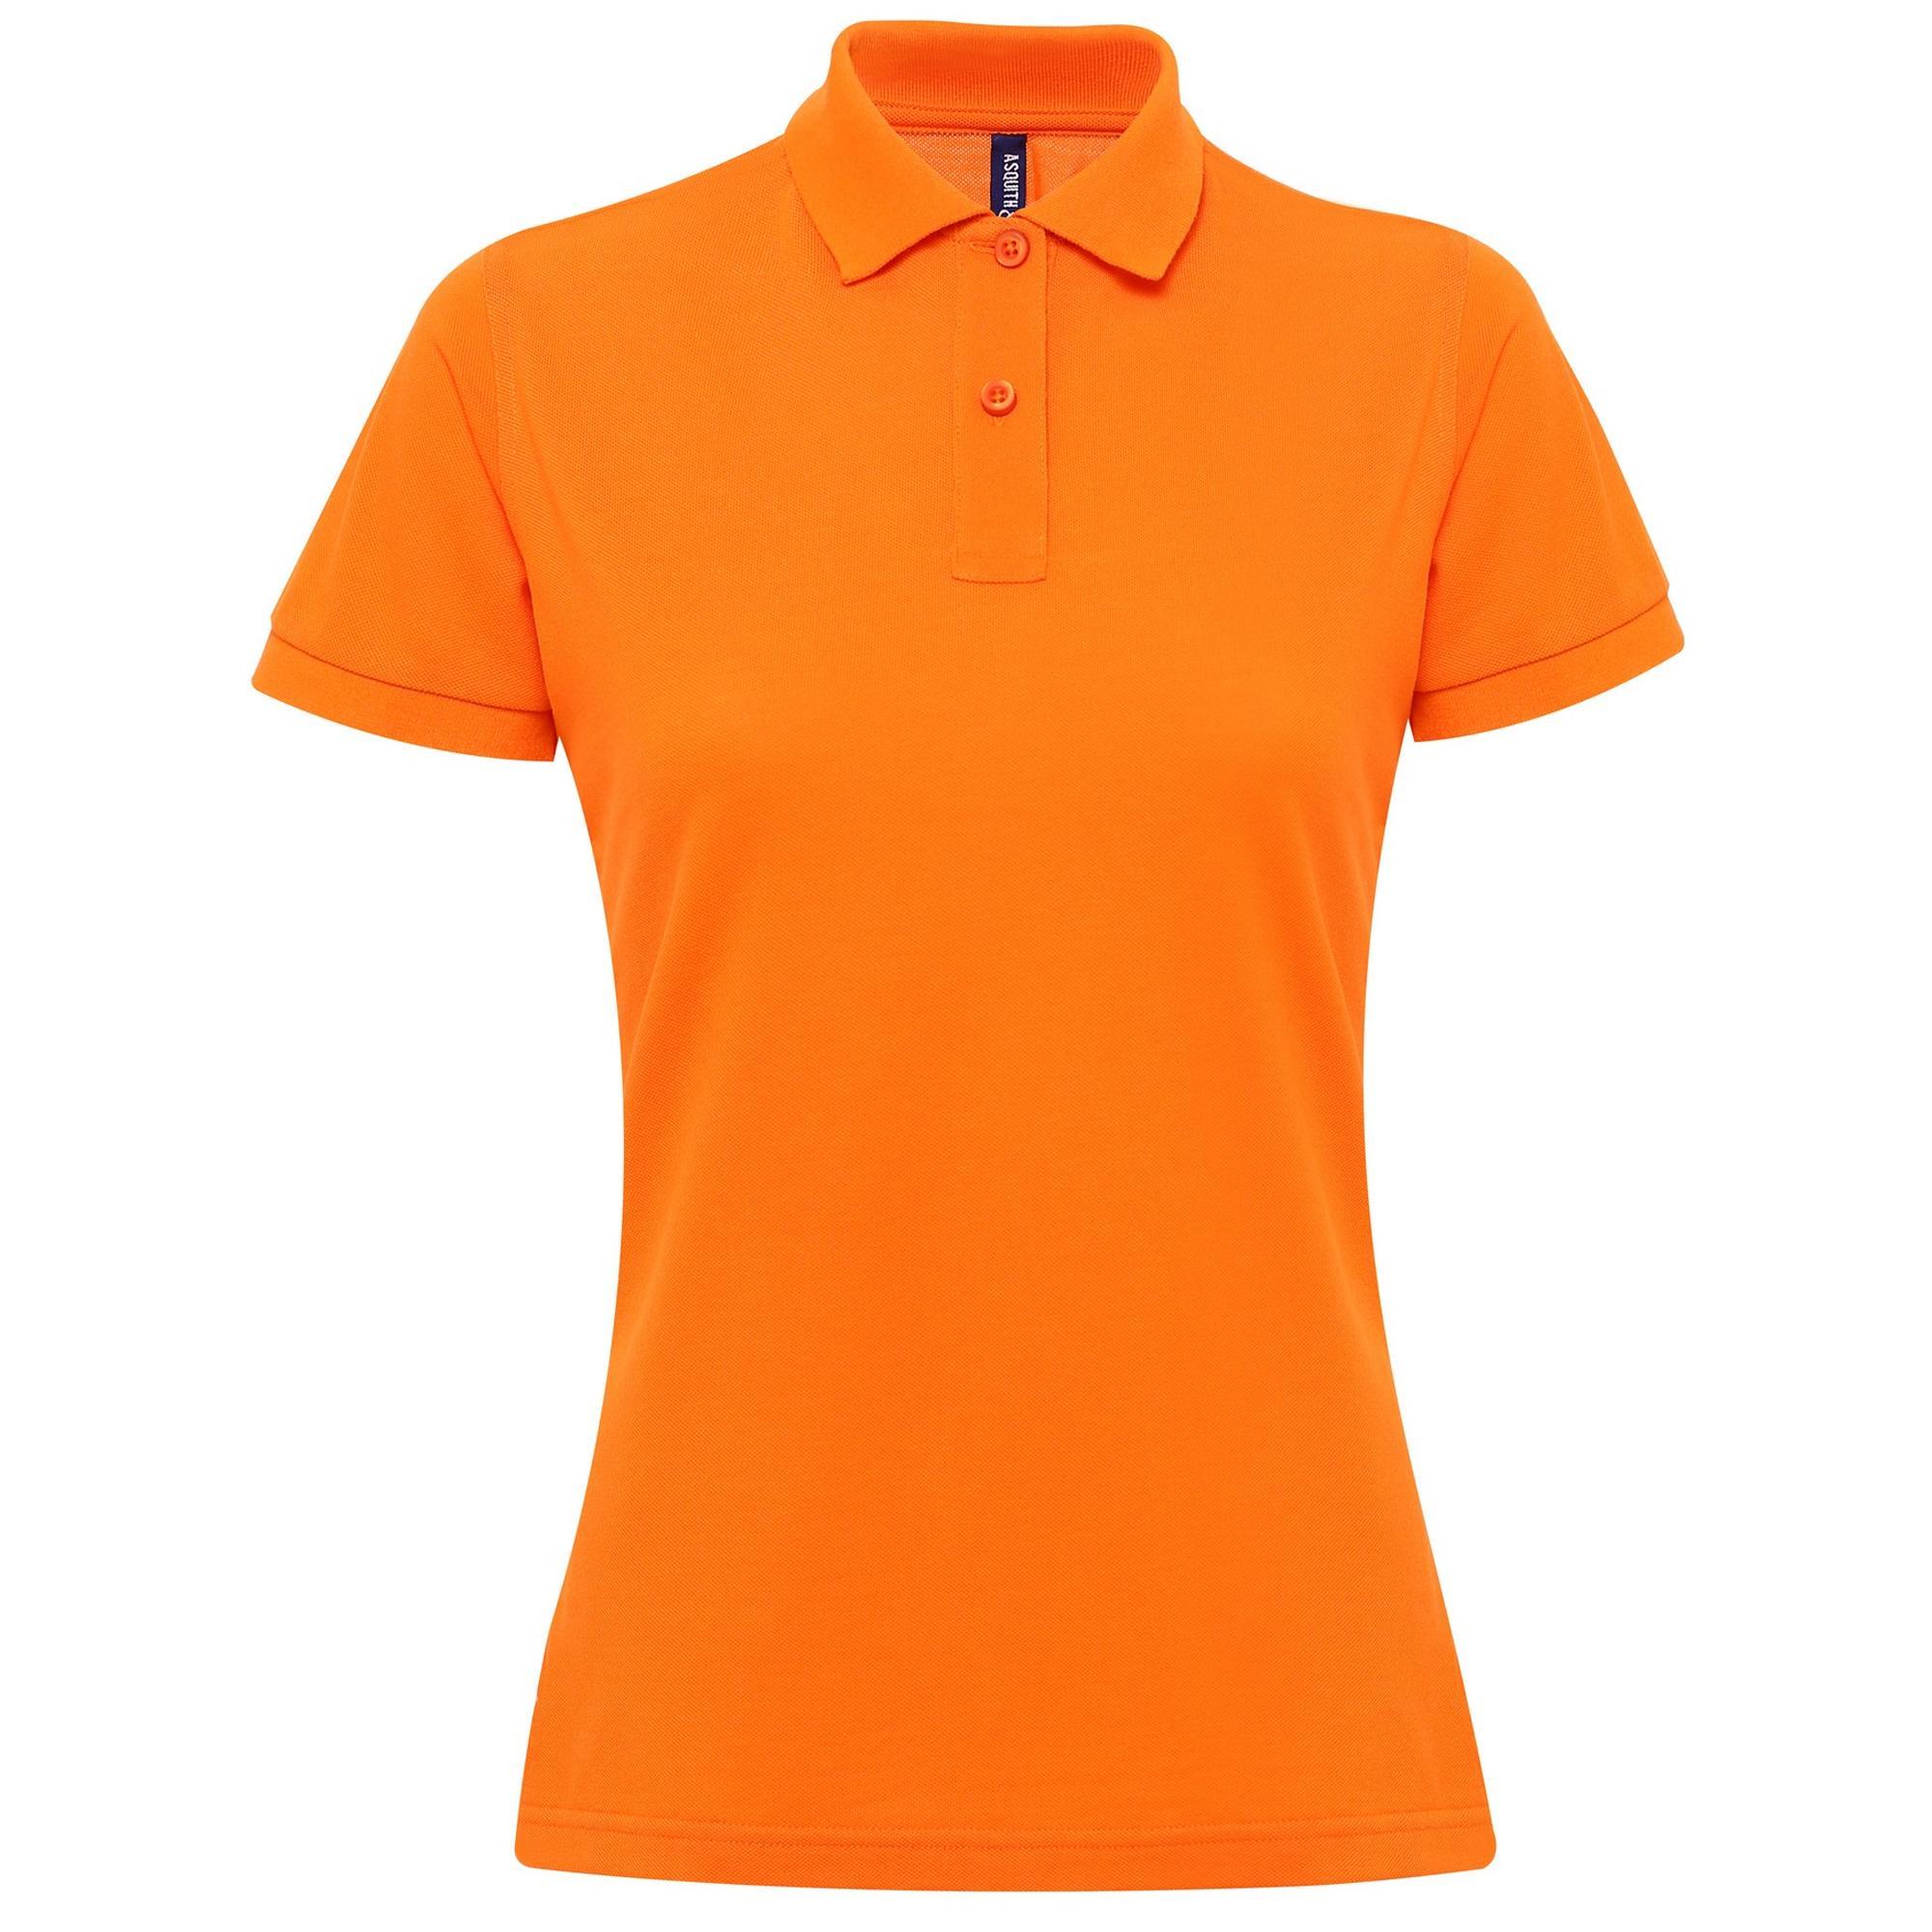 Asquith & Fox Womens/Ladies Short Sleeve Performance Blend Polo Shirt (Orange) (2XL)